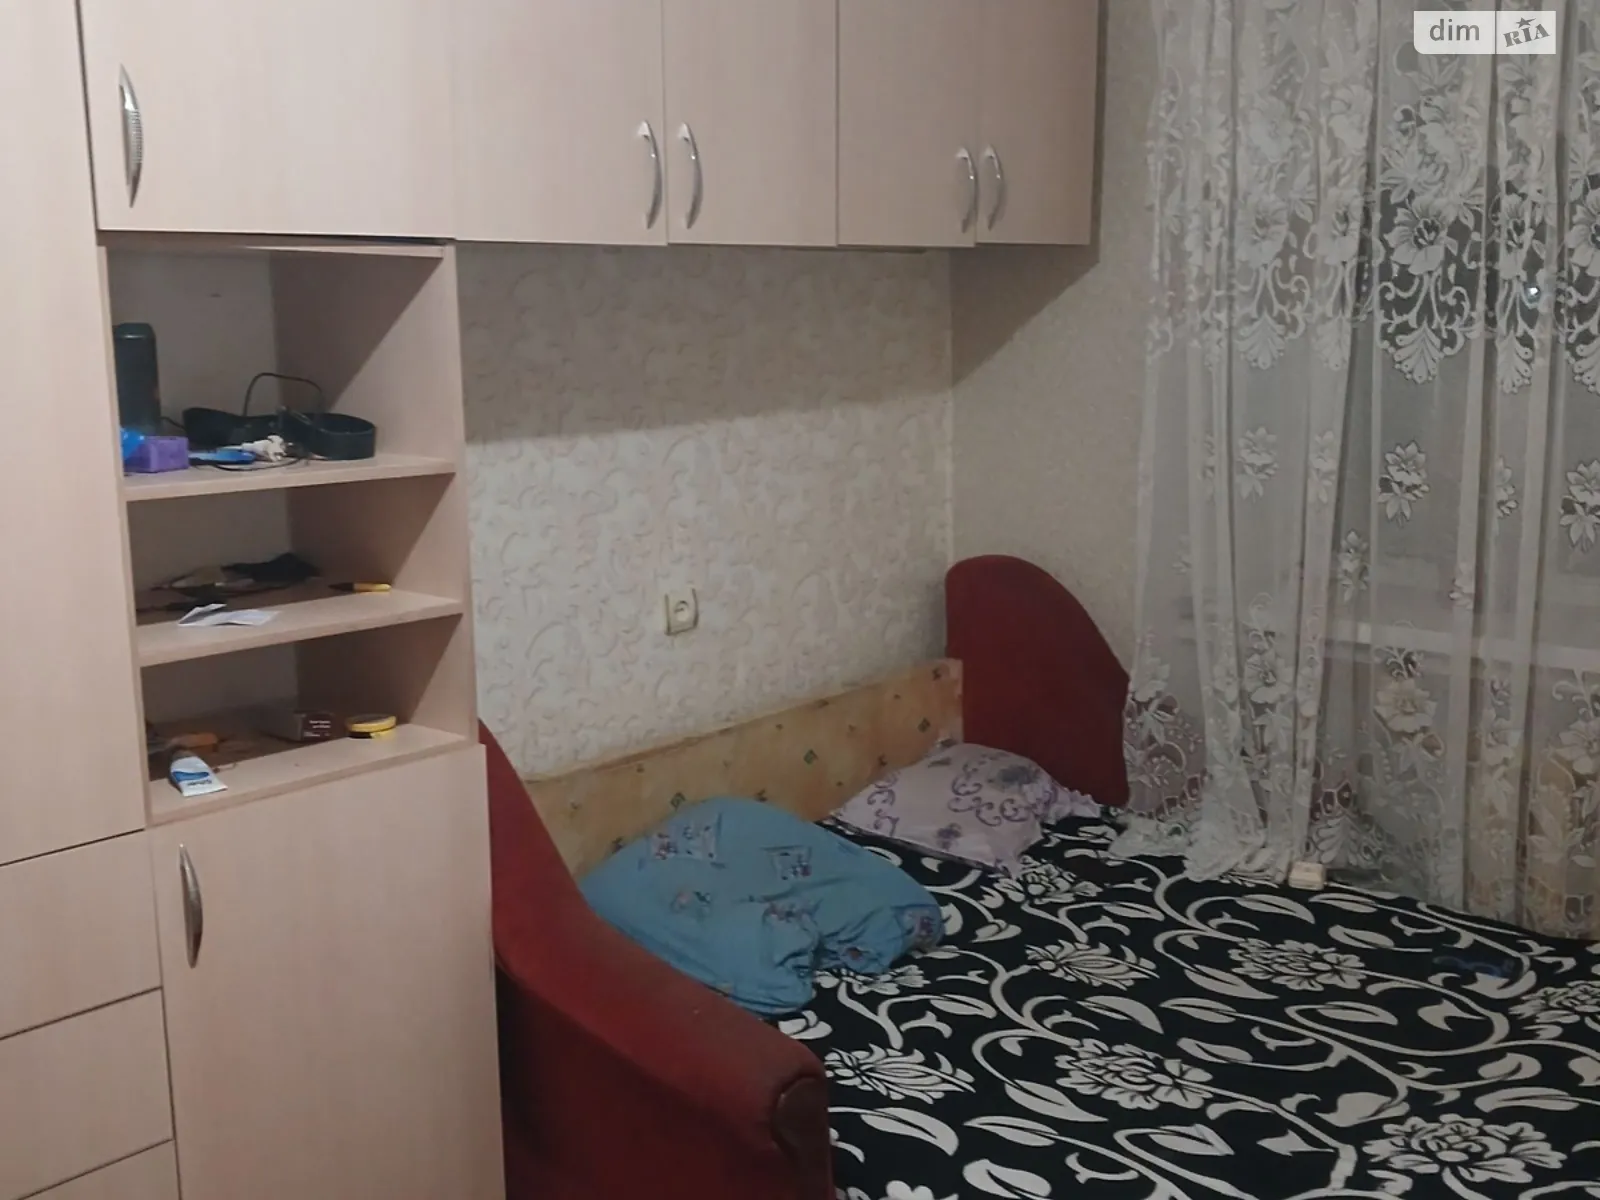 Продается комната 12 кв. м в Одессе, цена: 7000 $ - фото 1